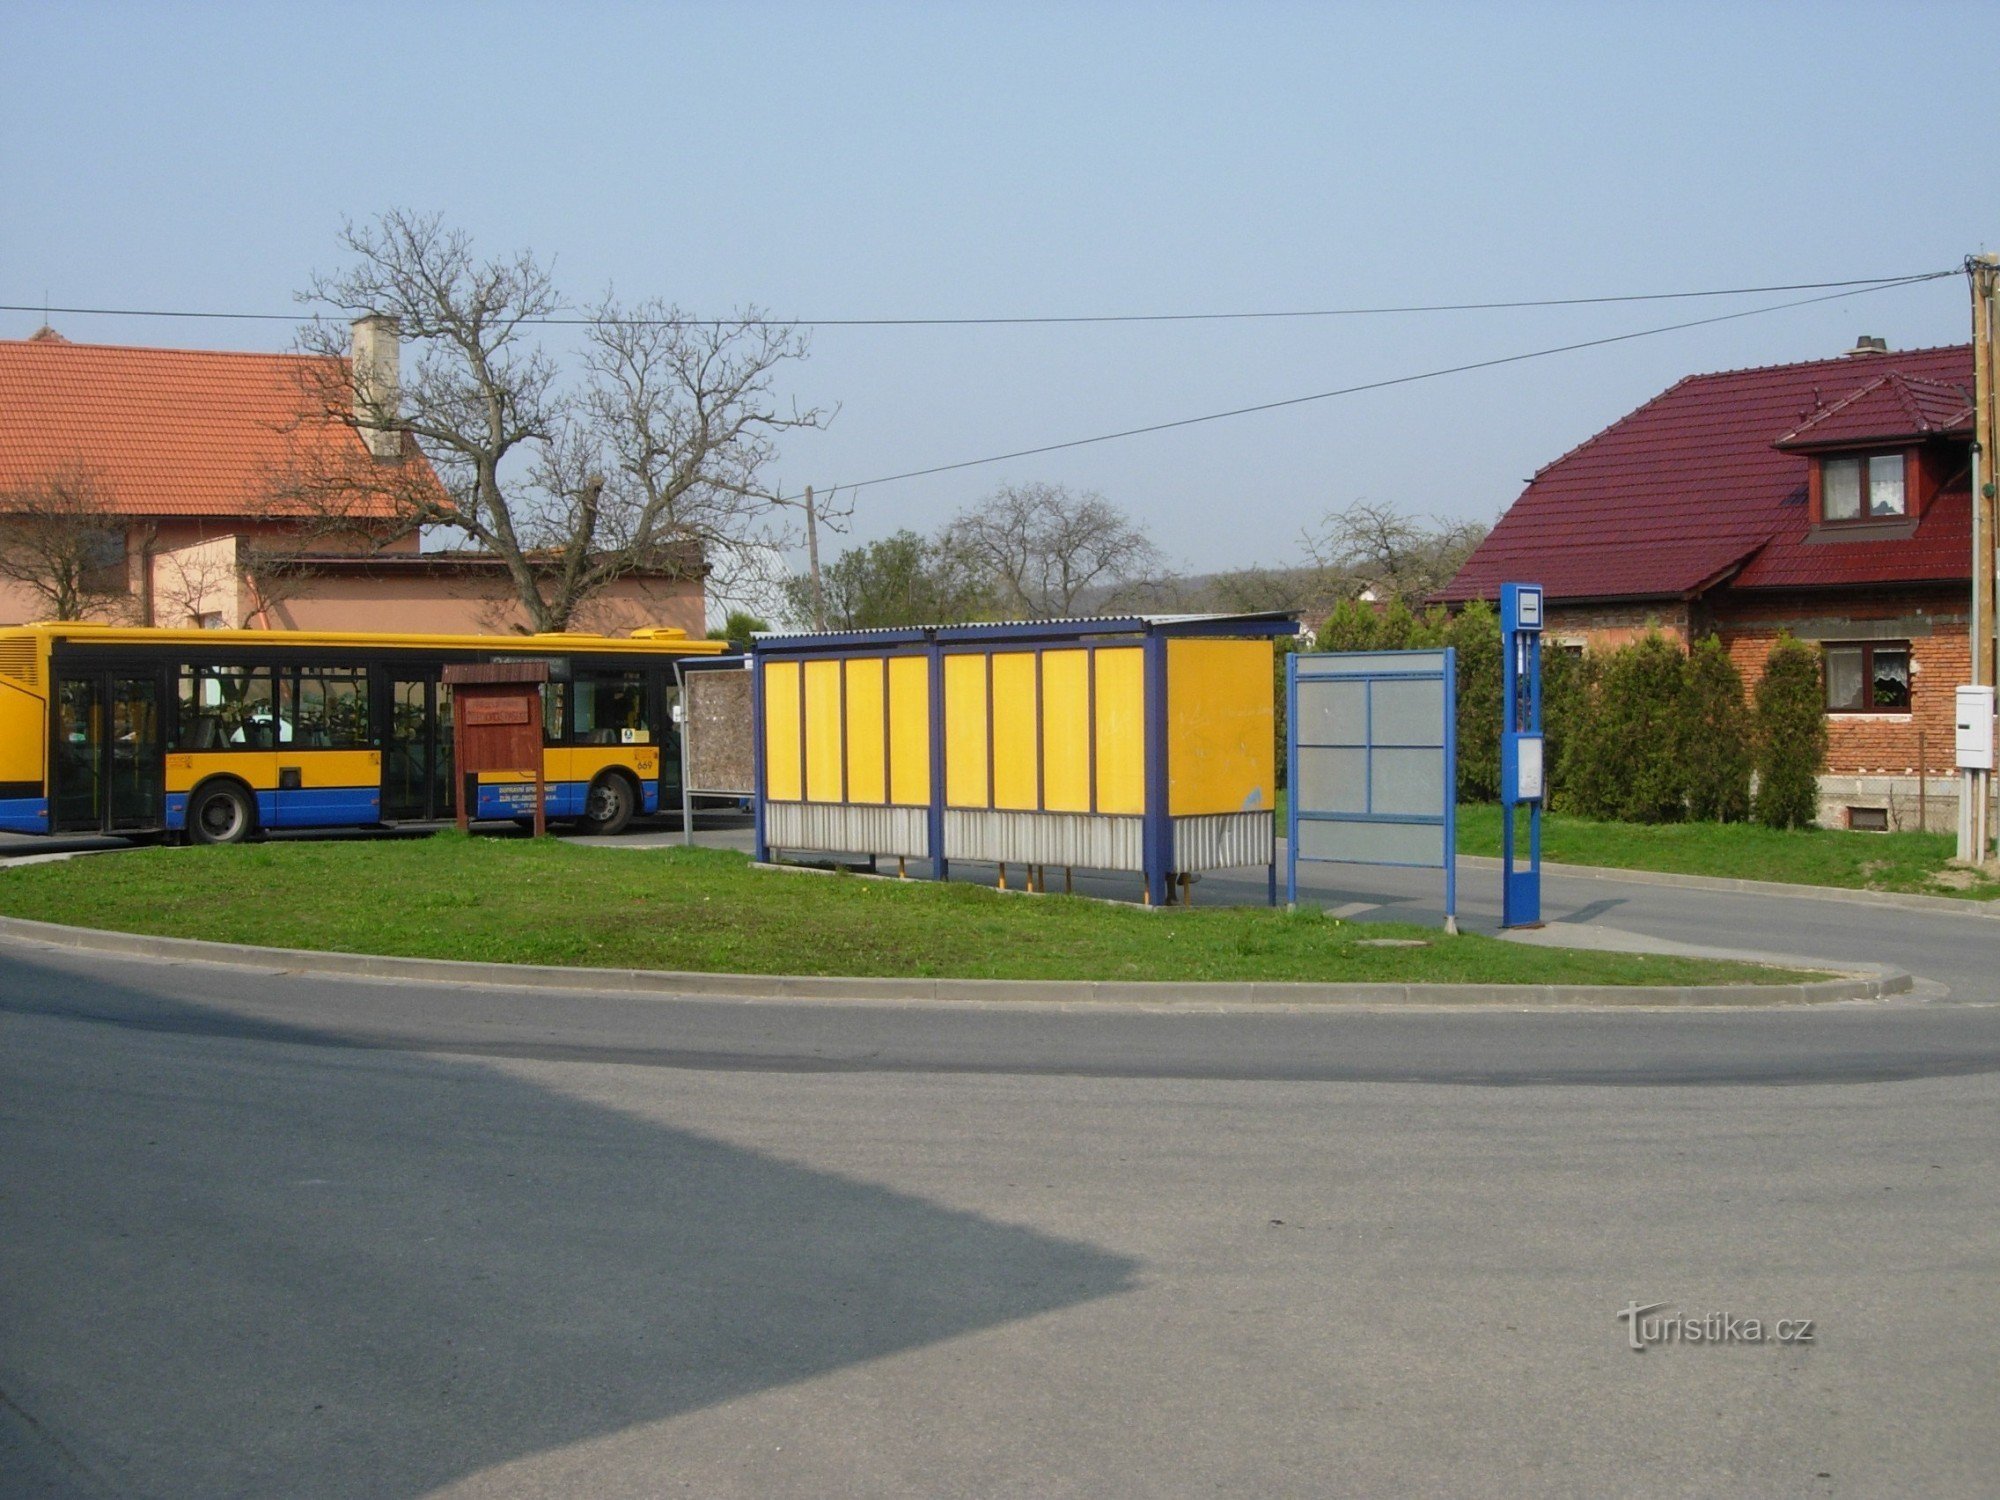 Rutebane i Jaroslavice, start på ruten